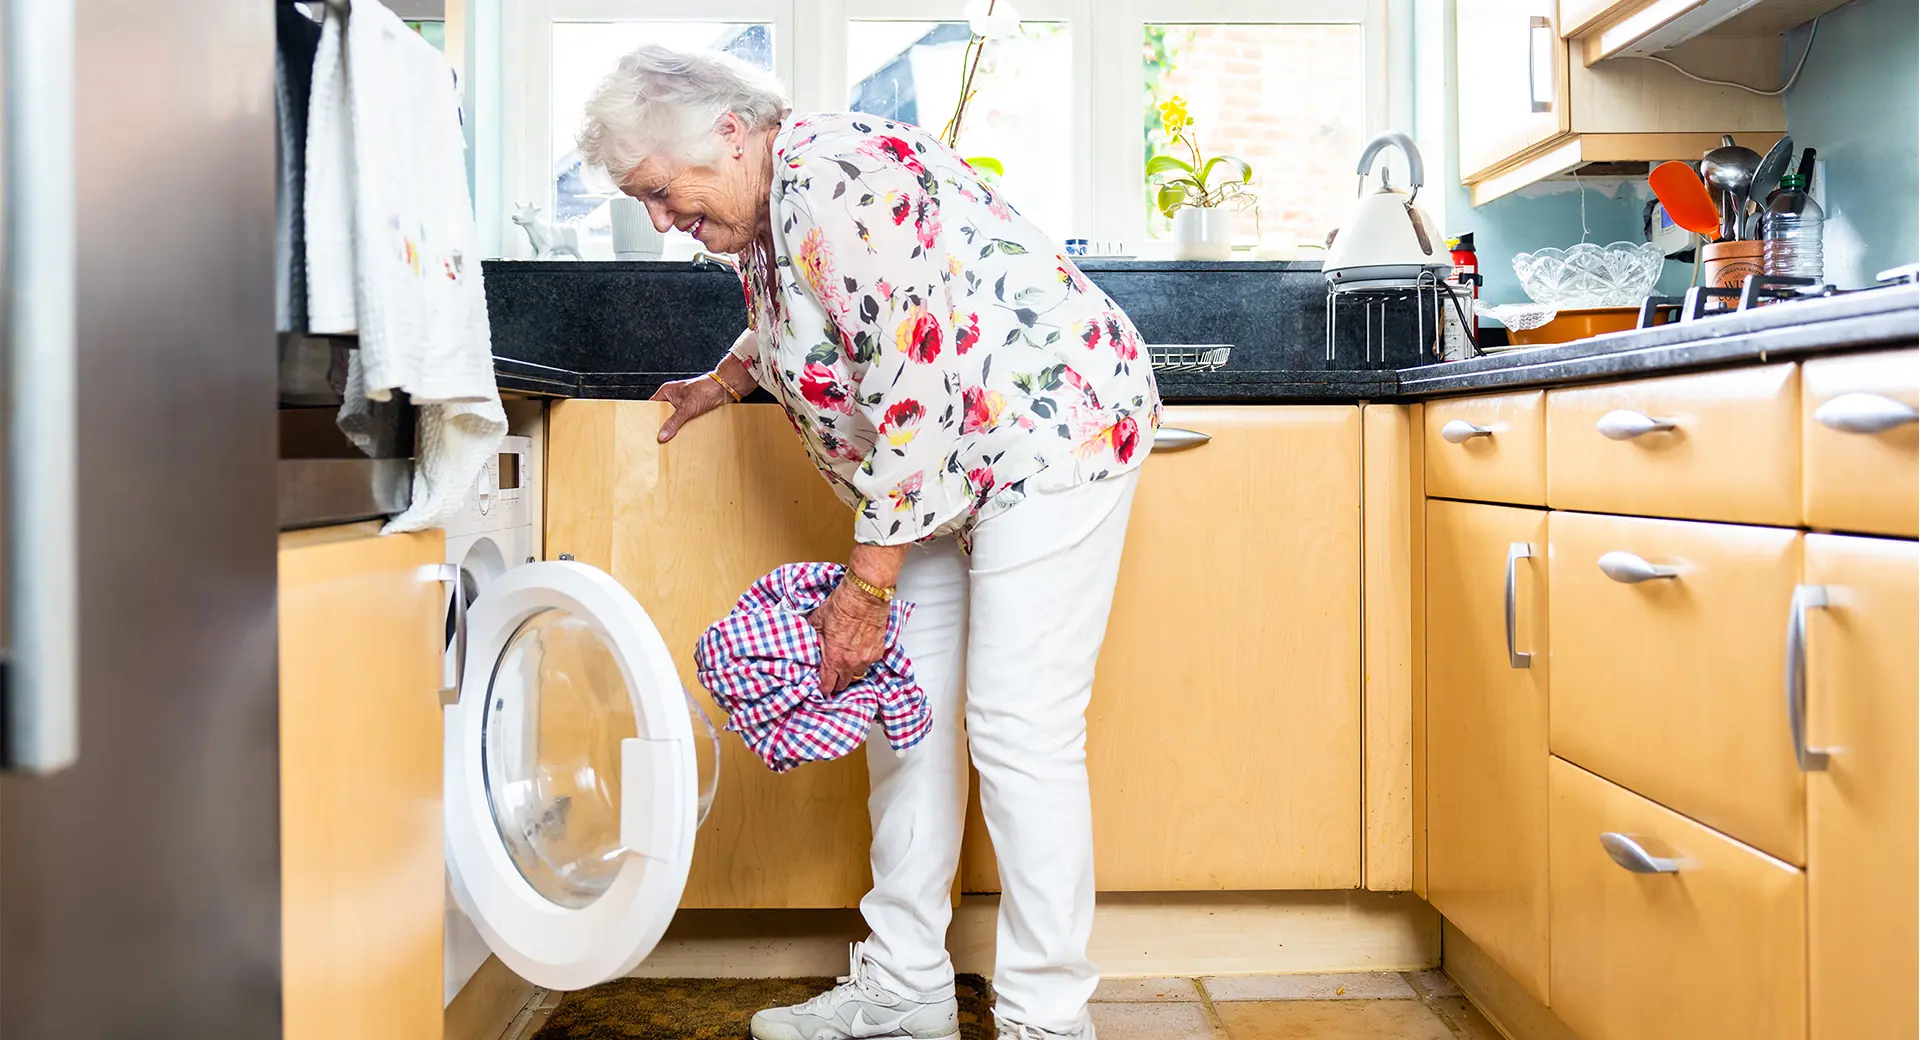 An elderly customer filling a washing machine